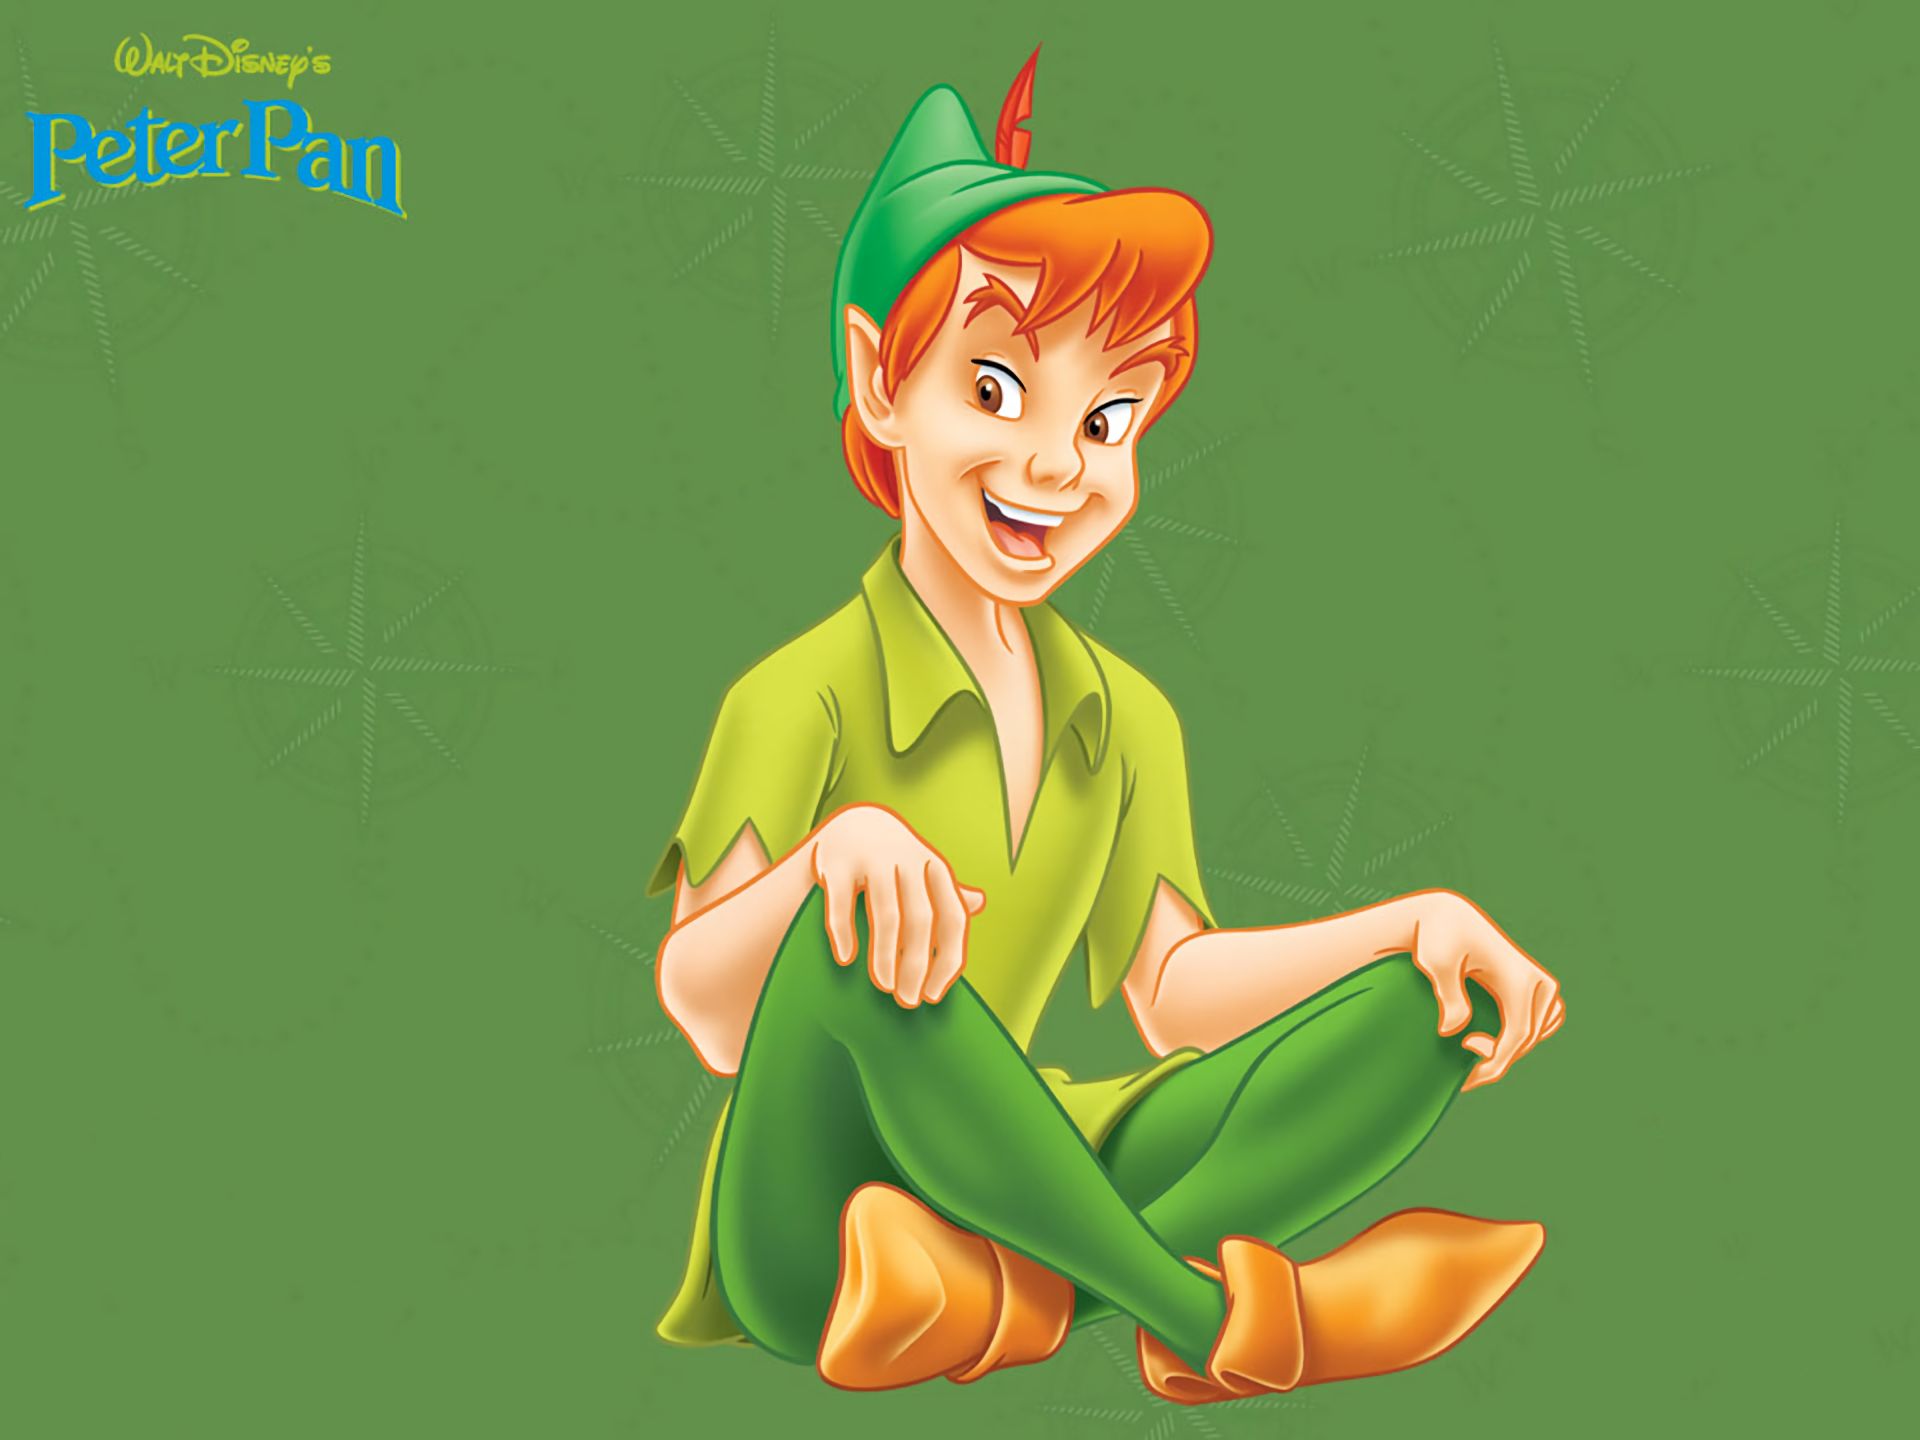  Peter Pan Cellphone FHD pic